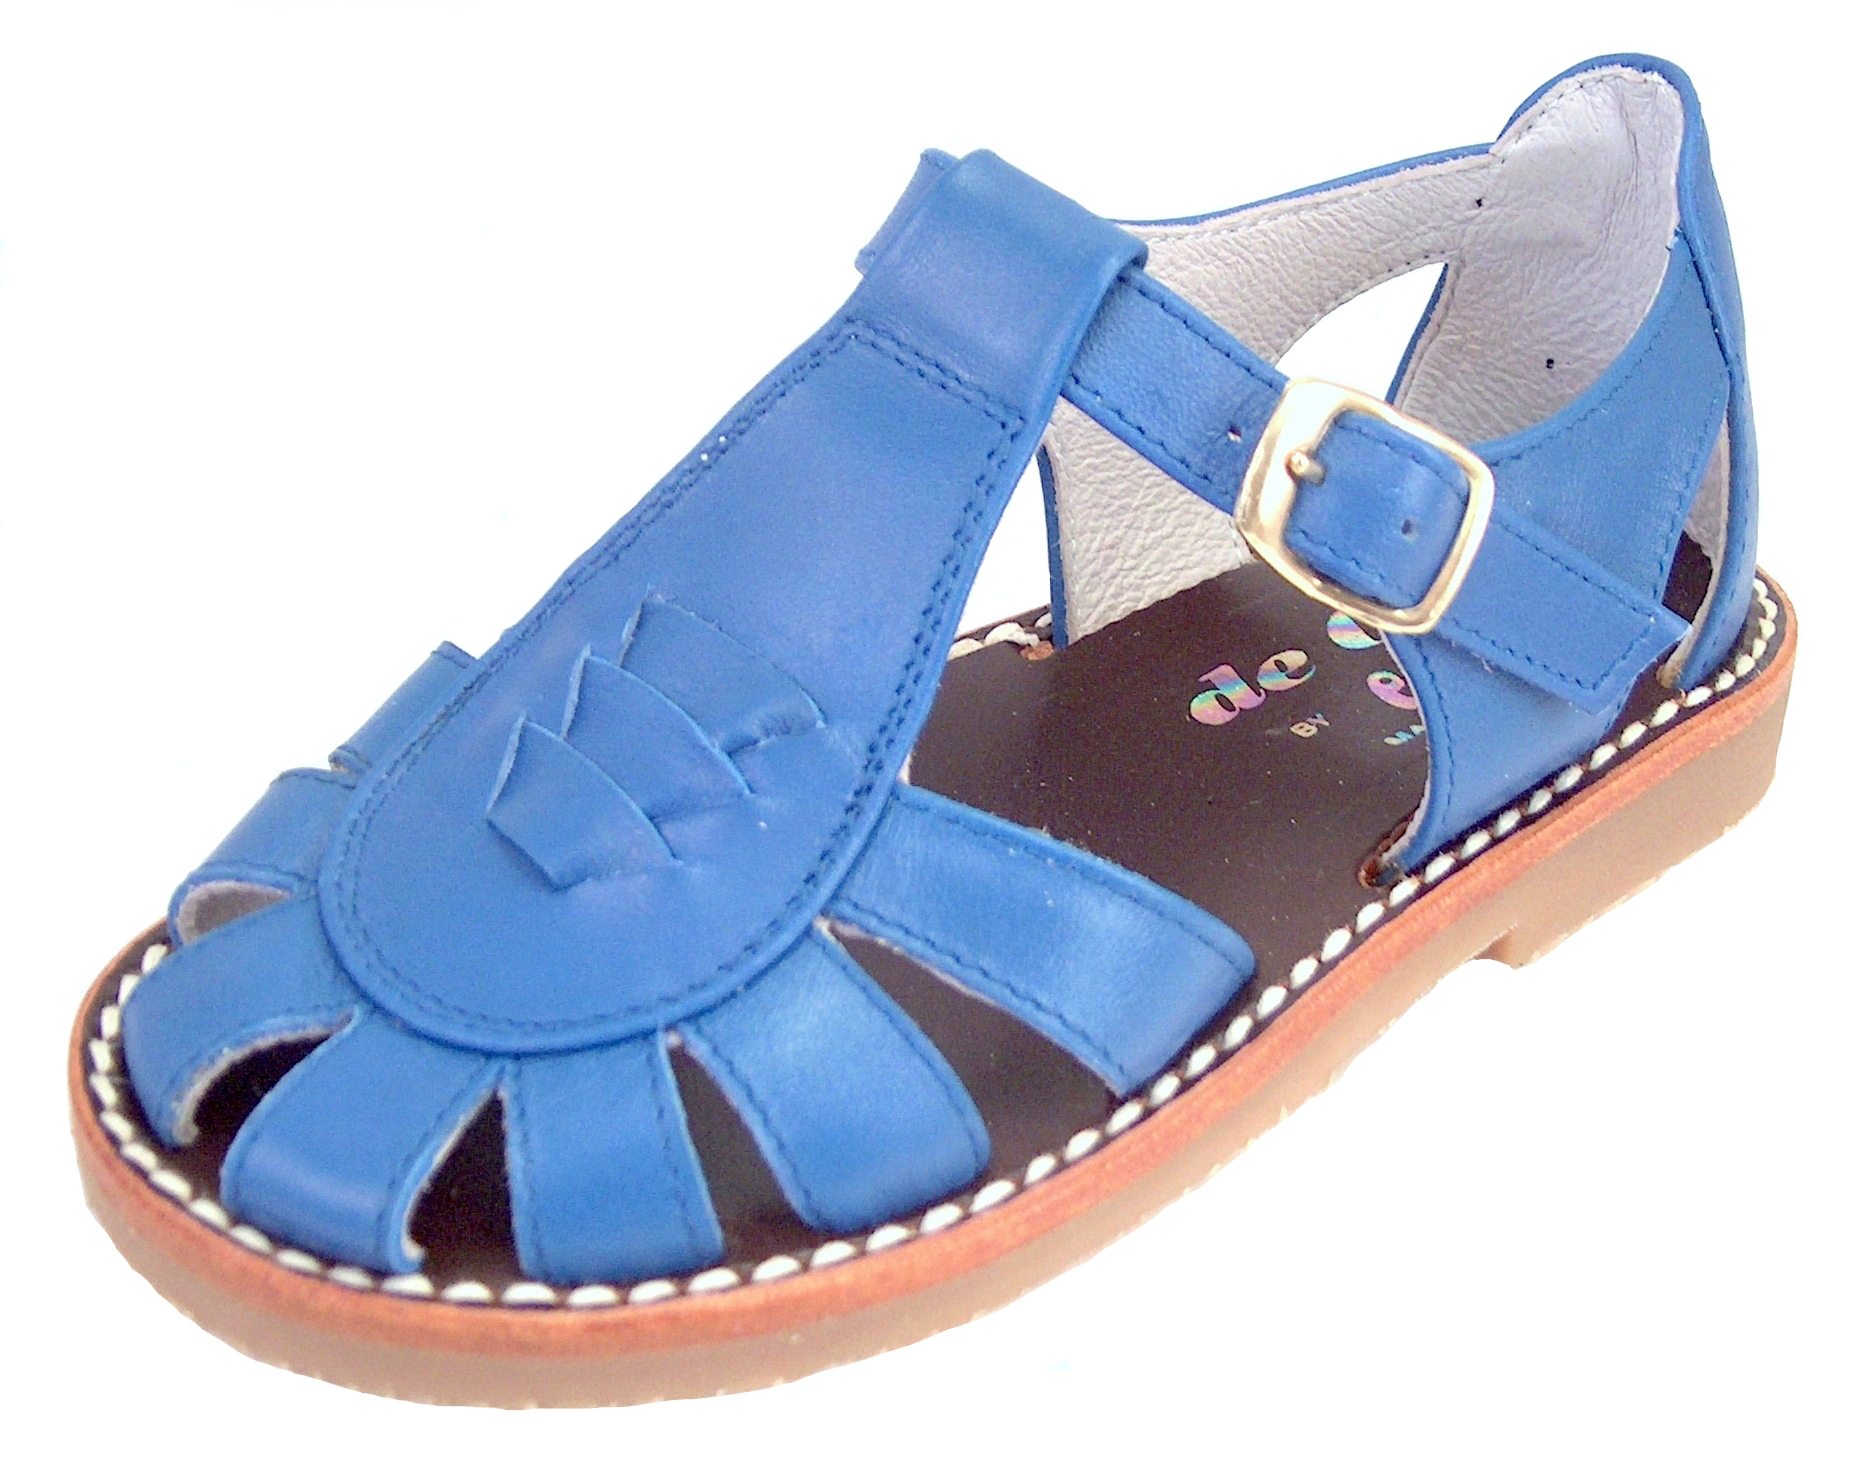 3468 - Blue Fisherman Sandals - Euro 22 Size 6